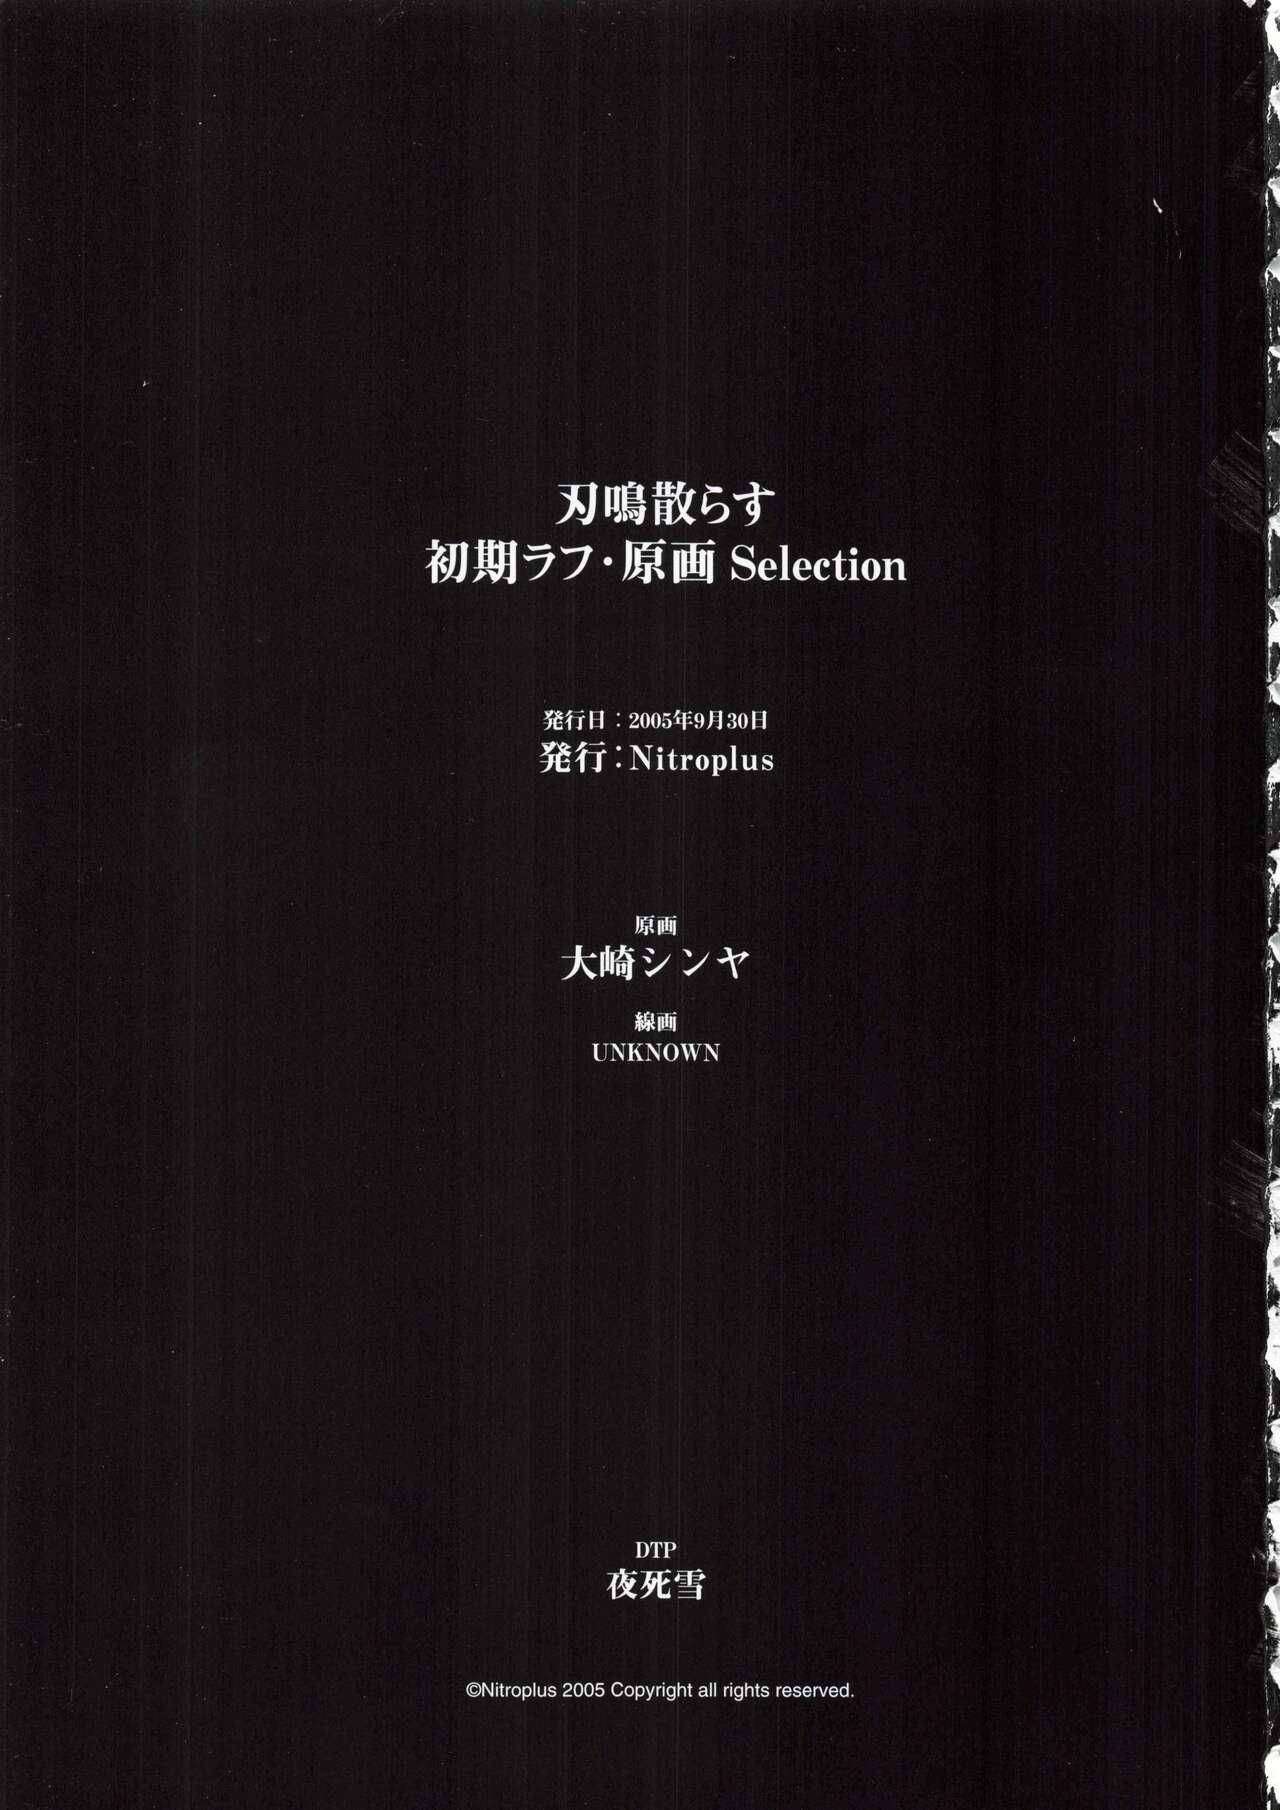 Hanachirasu - Initial Sketches and Unprocessed Illustrations - Selection 48